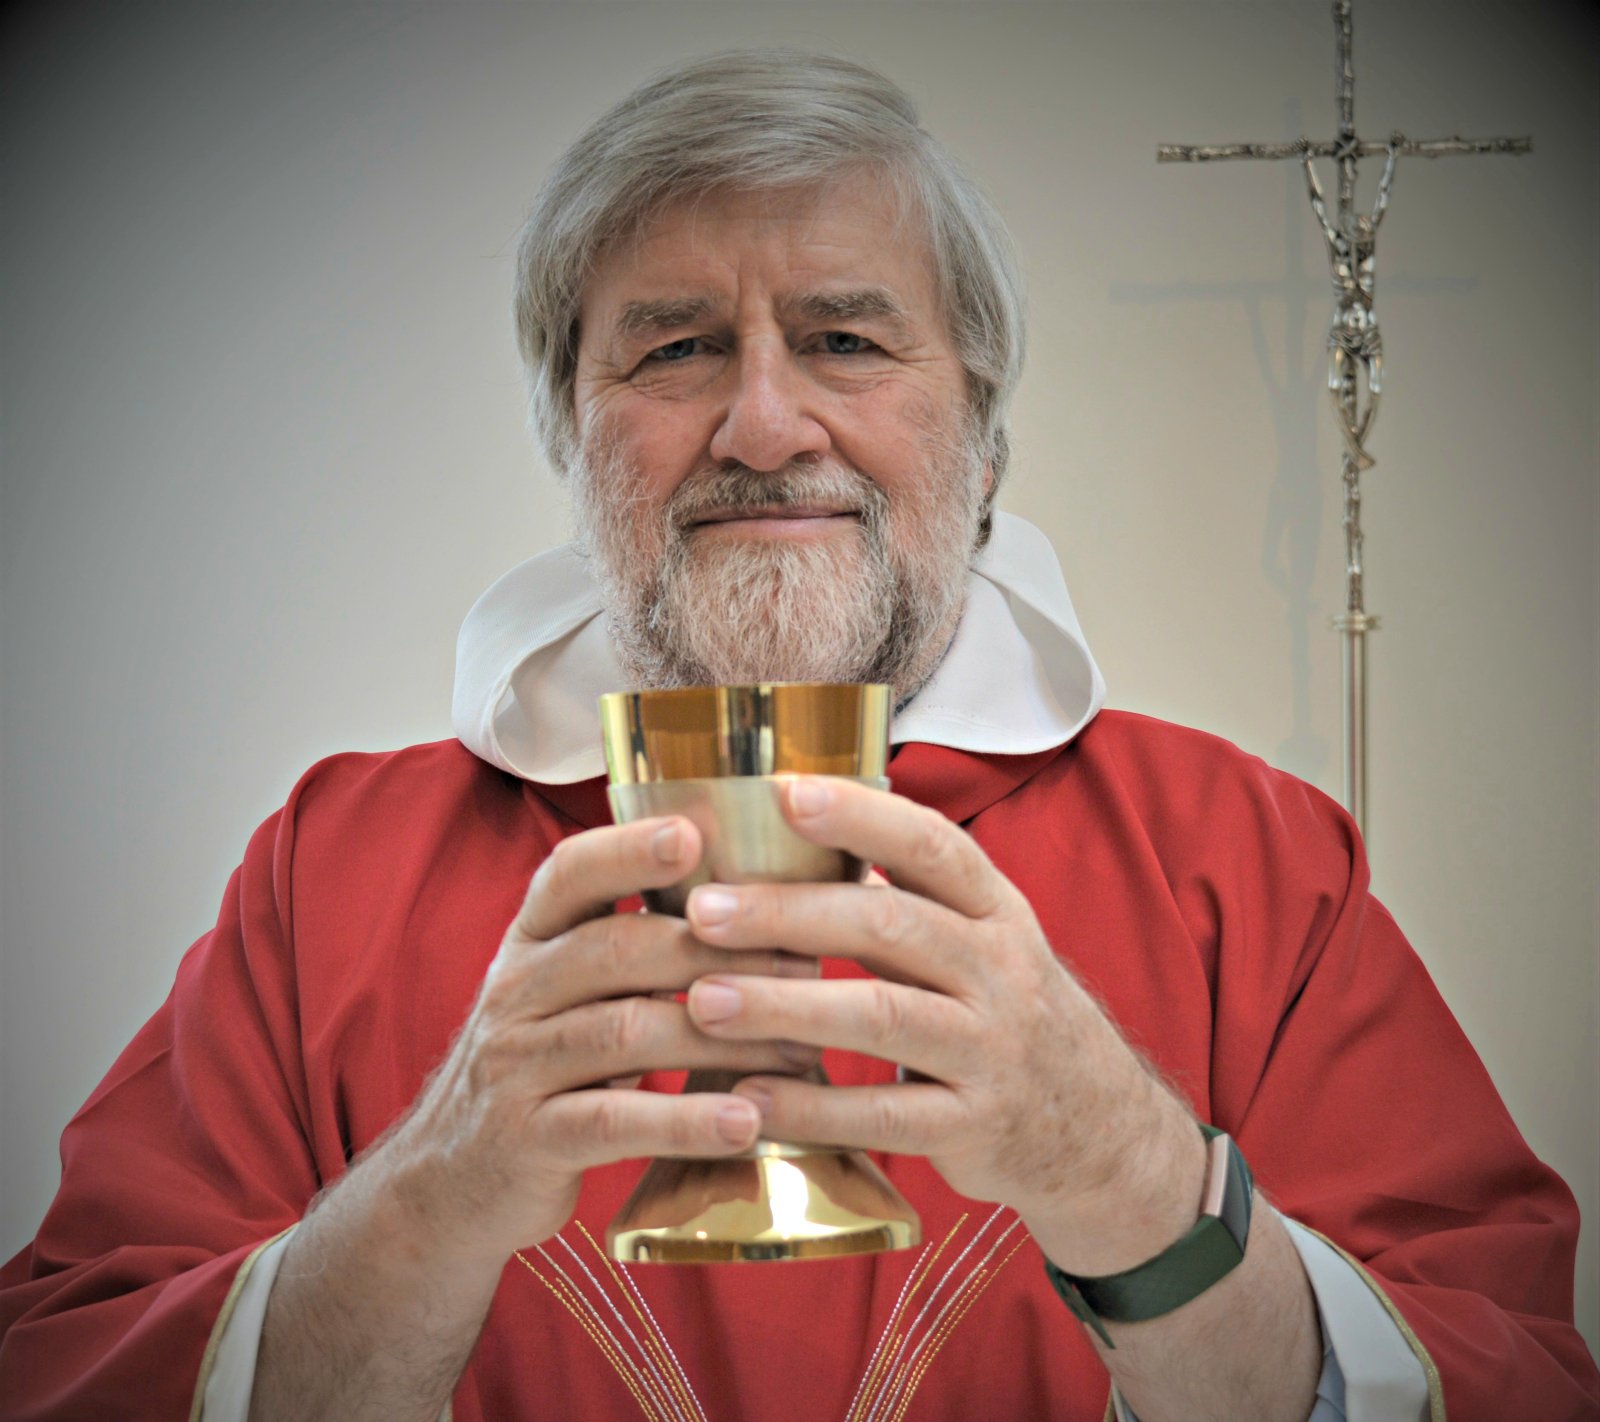 Fr David celebrates 40 years of priesthood